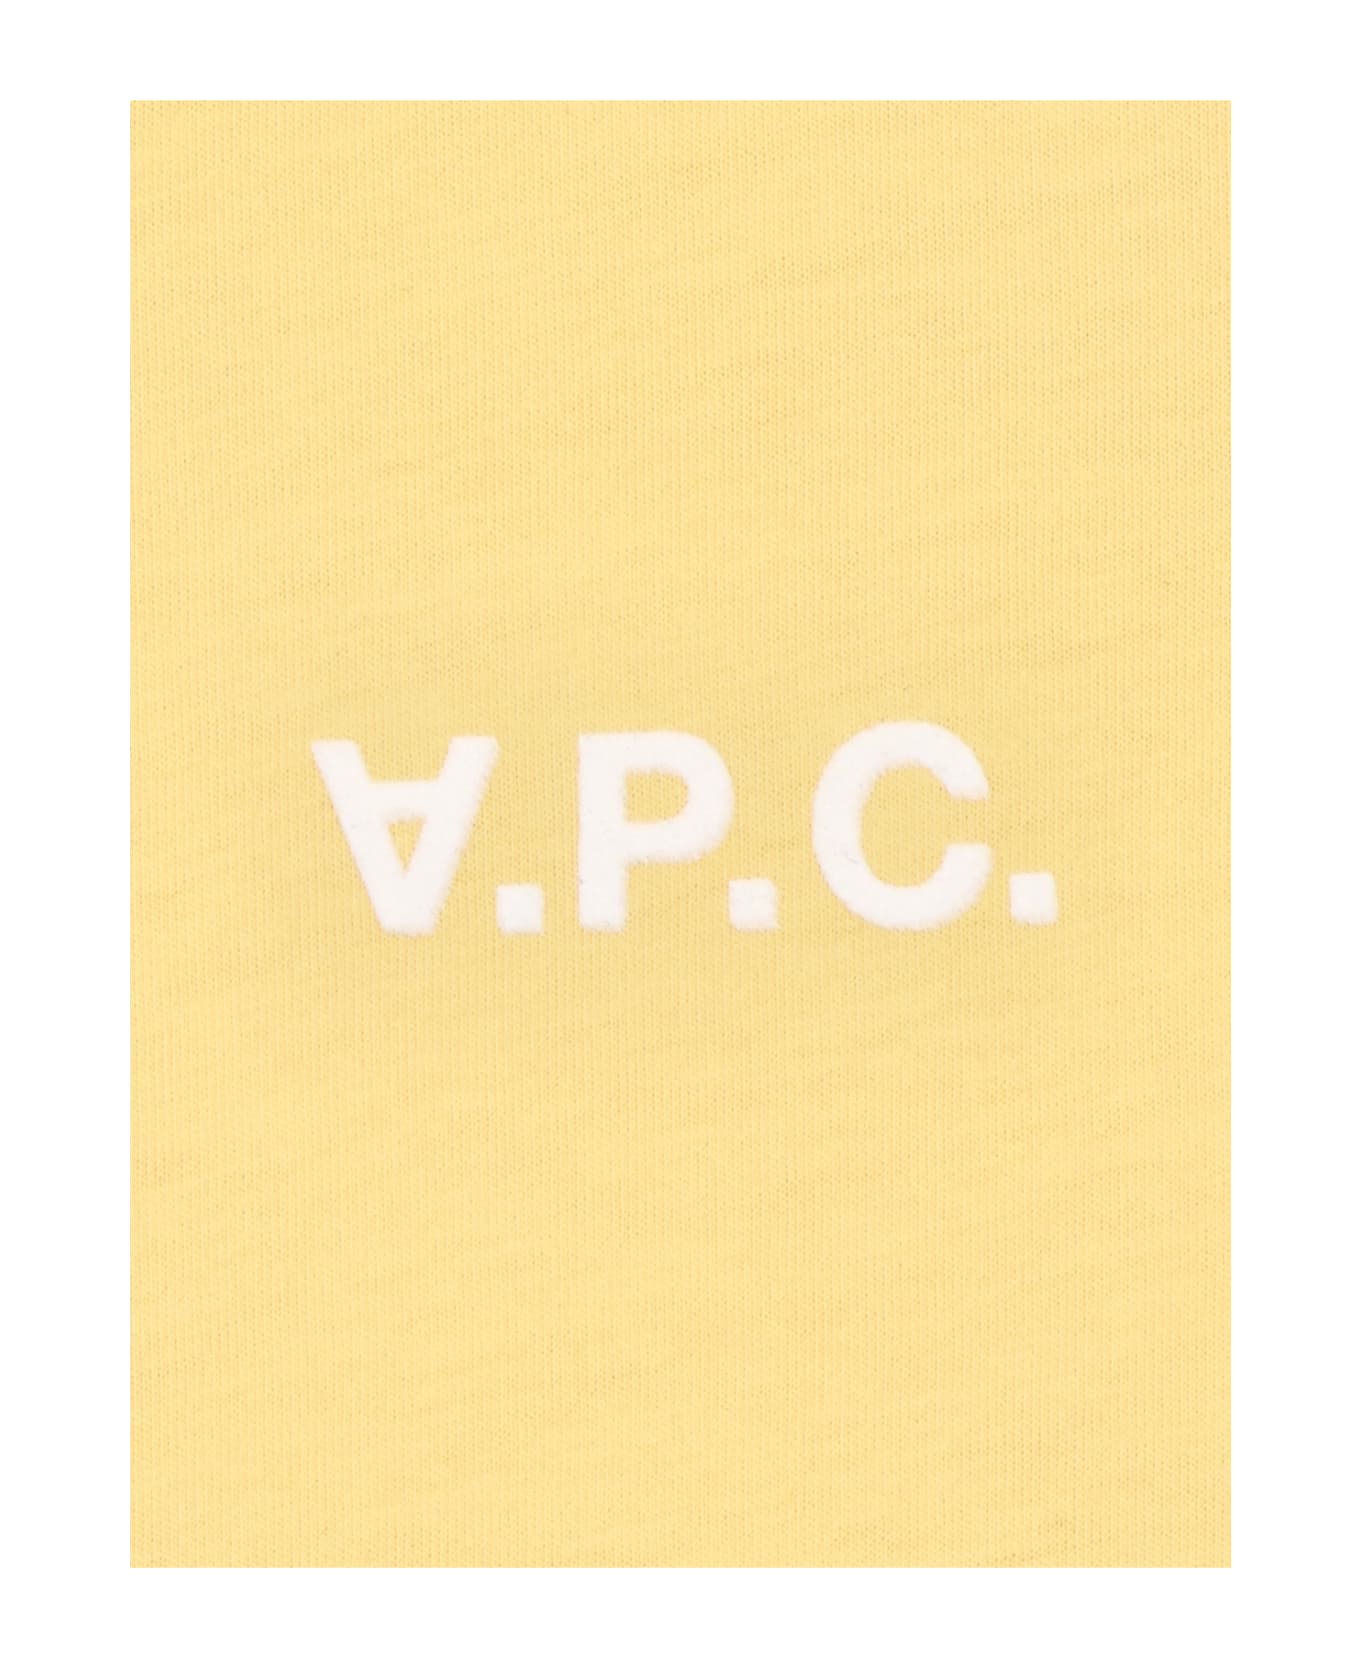 A.P.C. T-shirt - Yellow シャツ